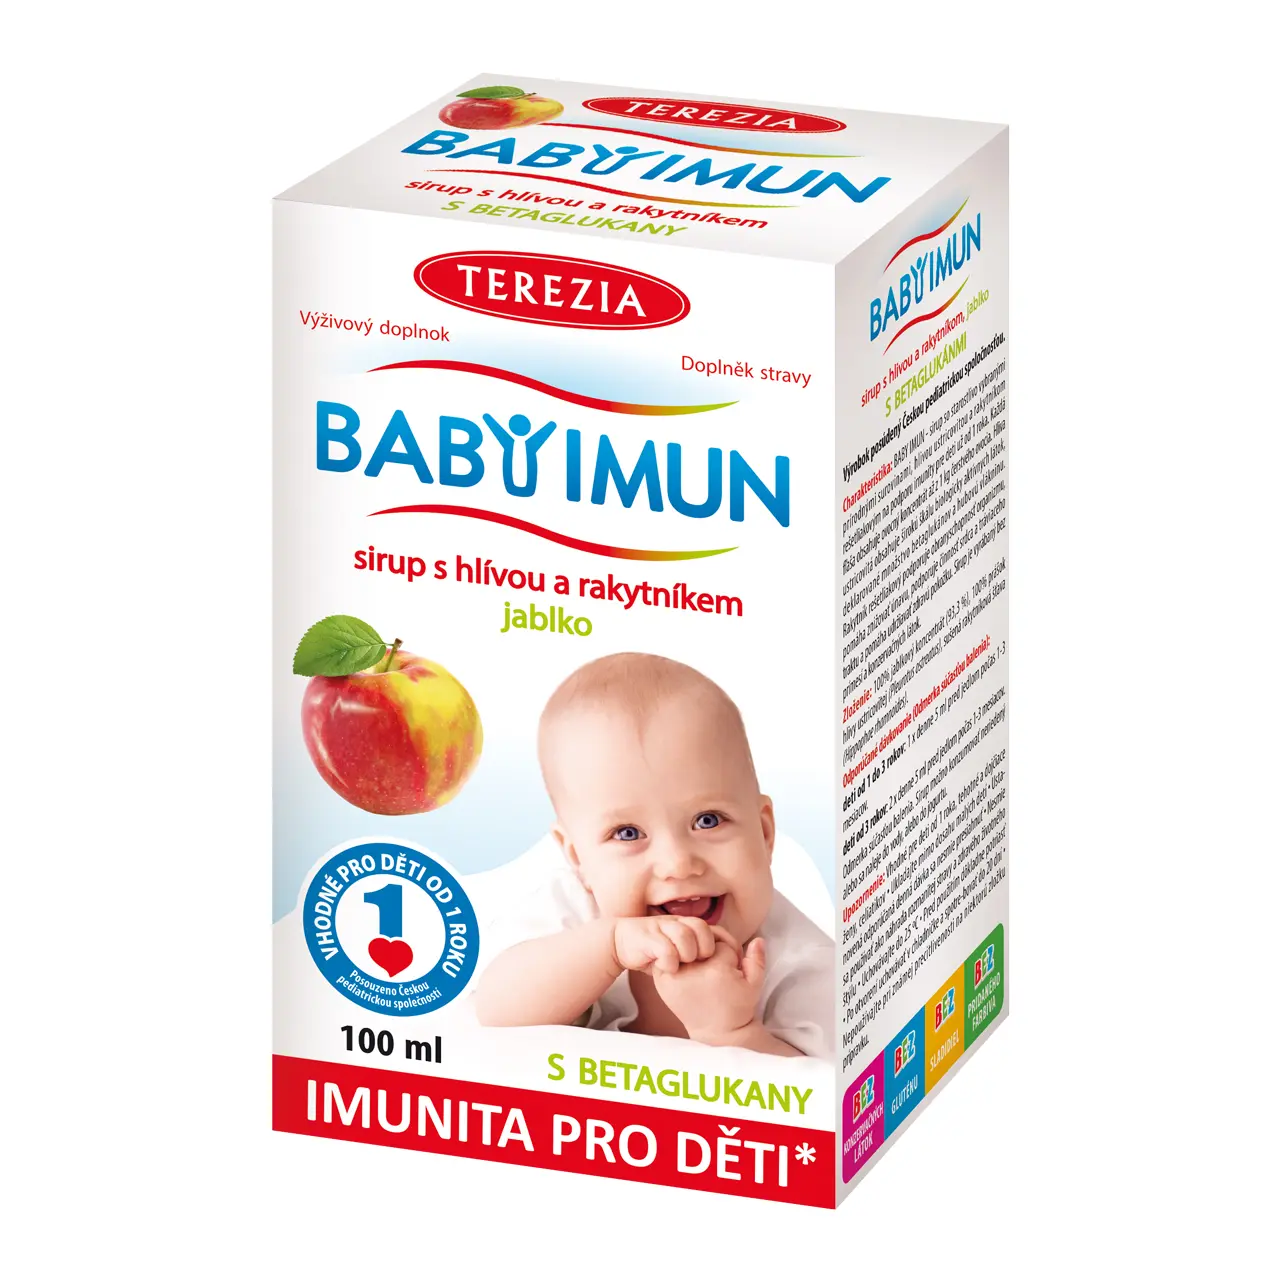 Terezia Company Baby Imun sirup s hlívou a rakytníkem 100 ml